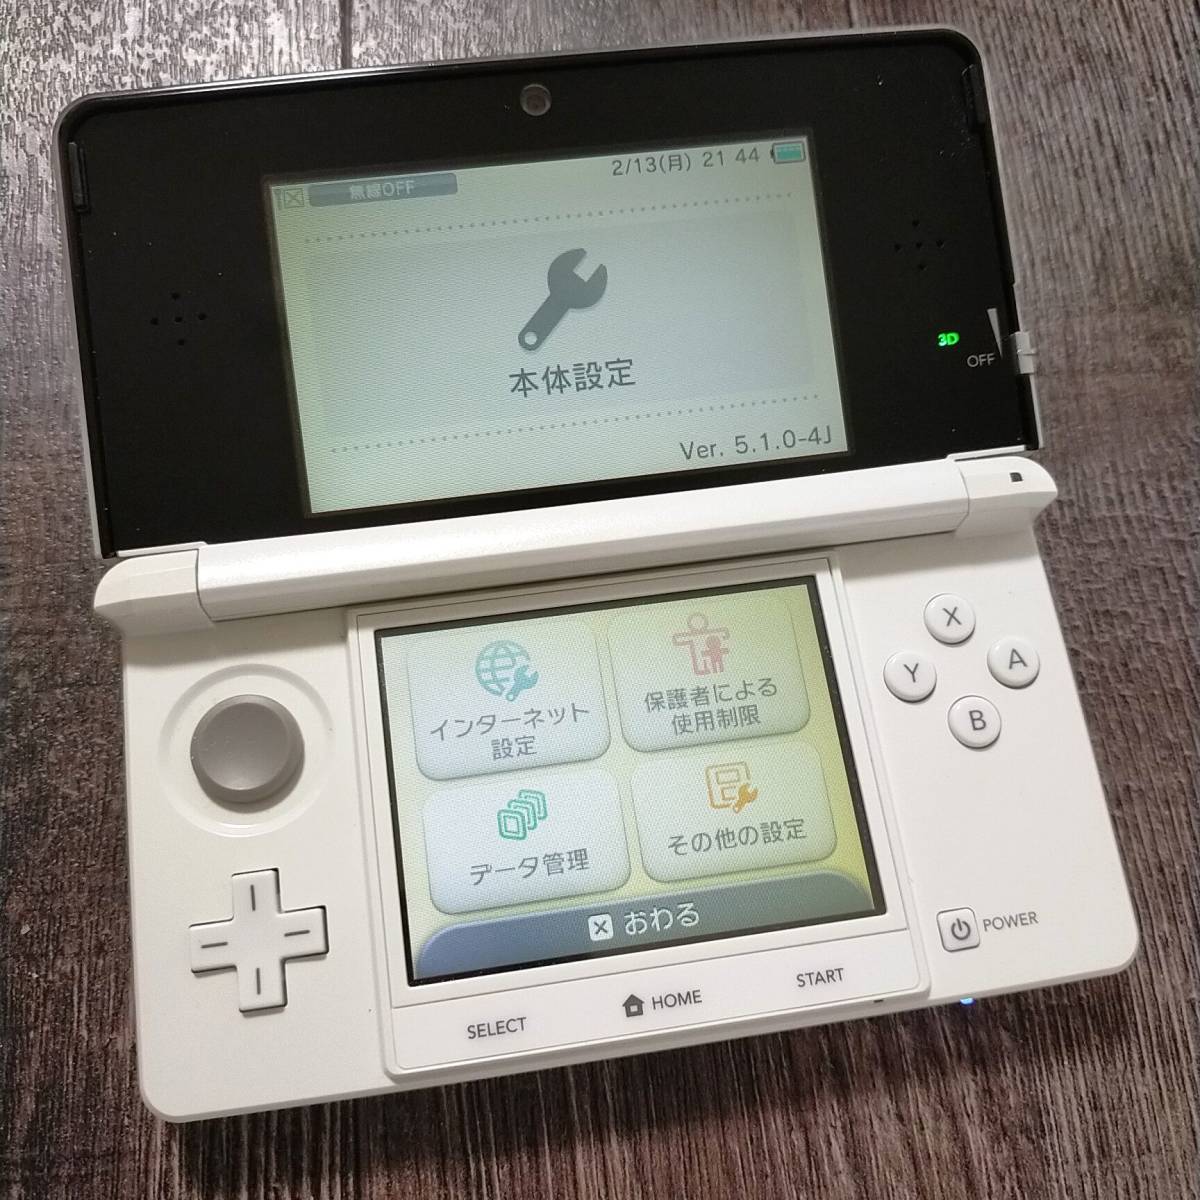 3ds 本体 アイスホワイト 白 NINTENDO 3DS 中古 任天堂 送料無料 動作